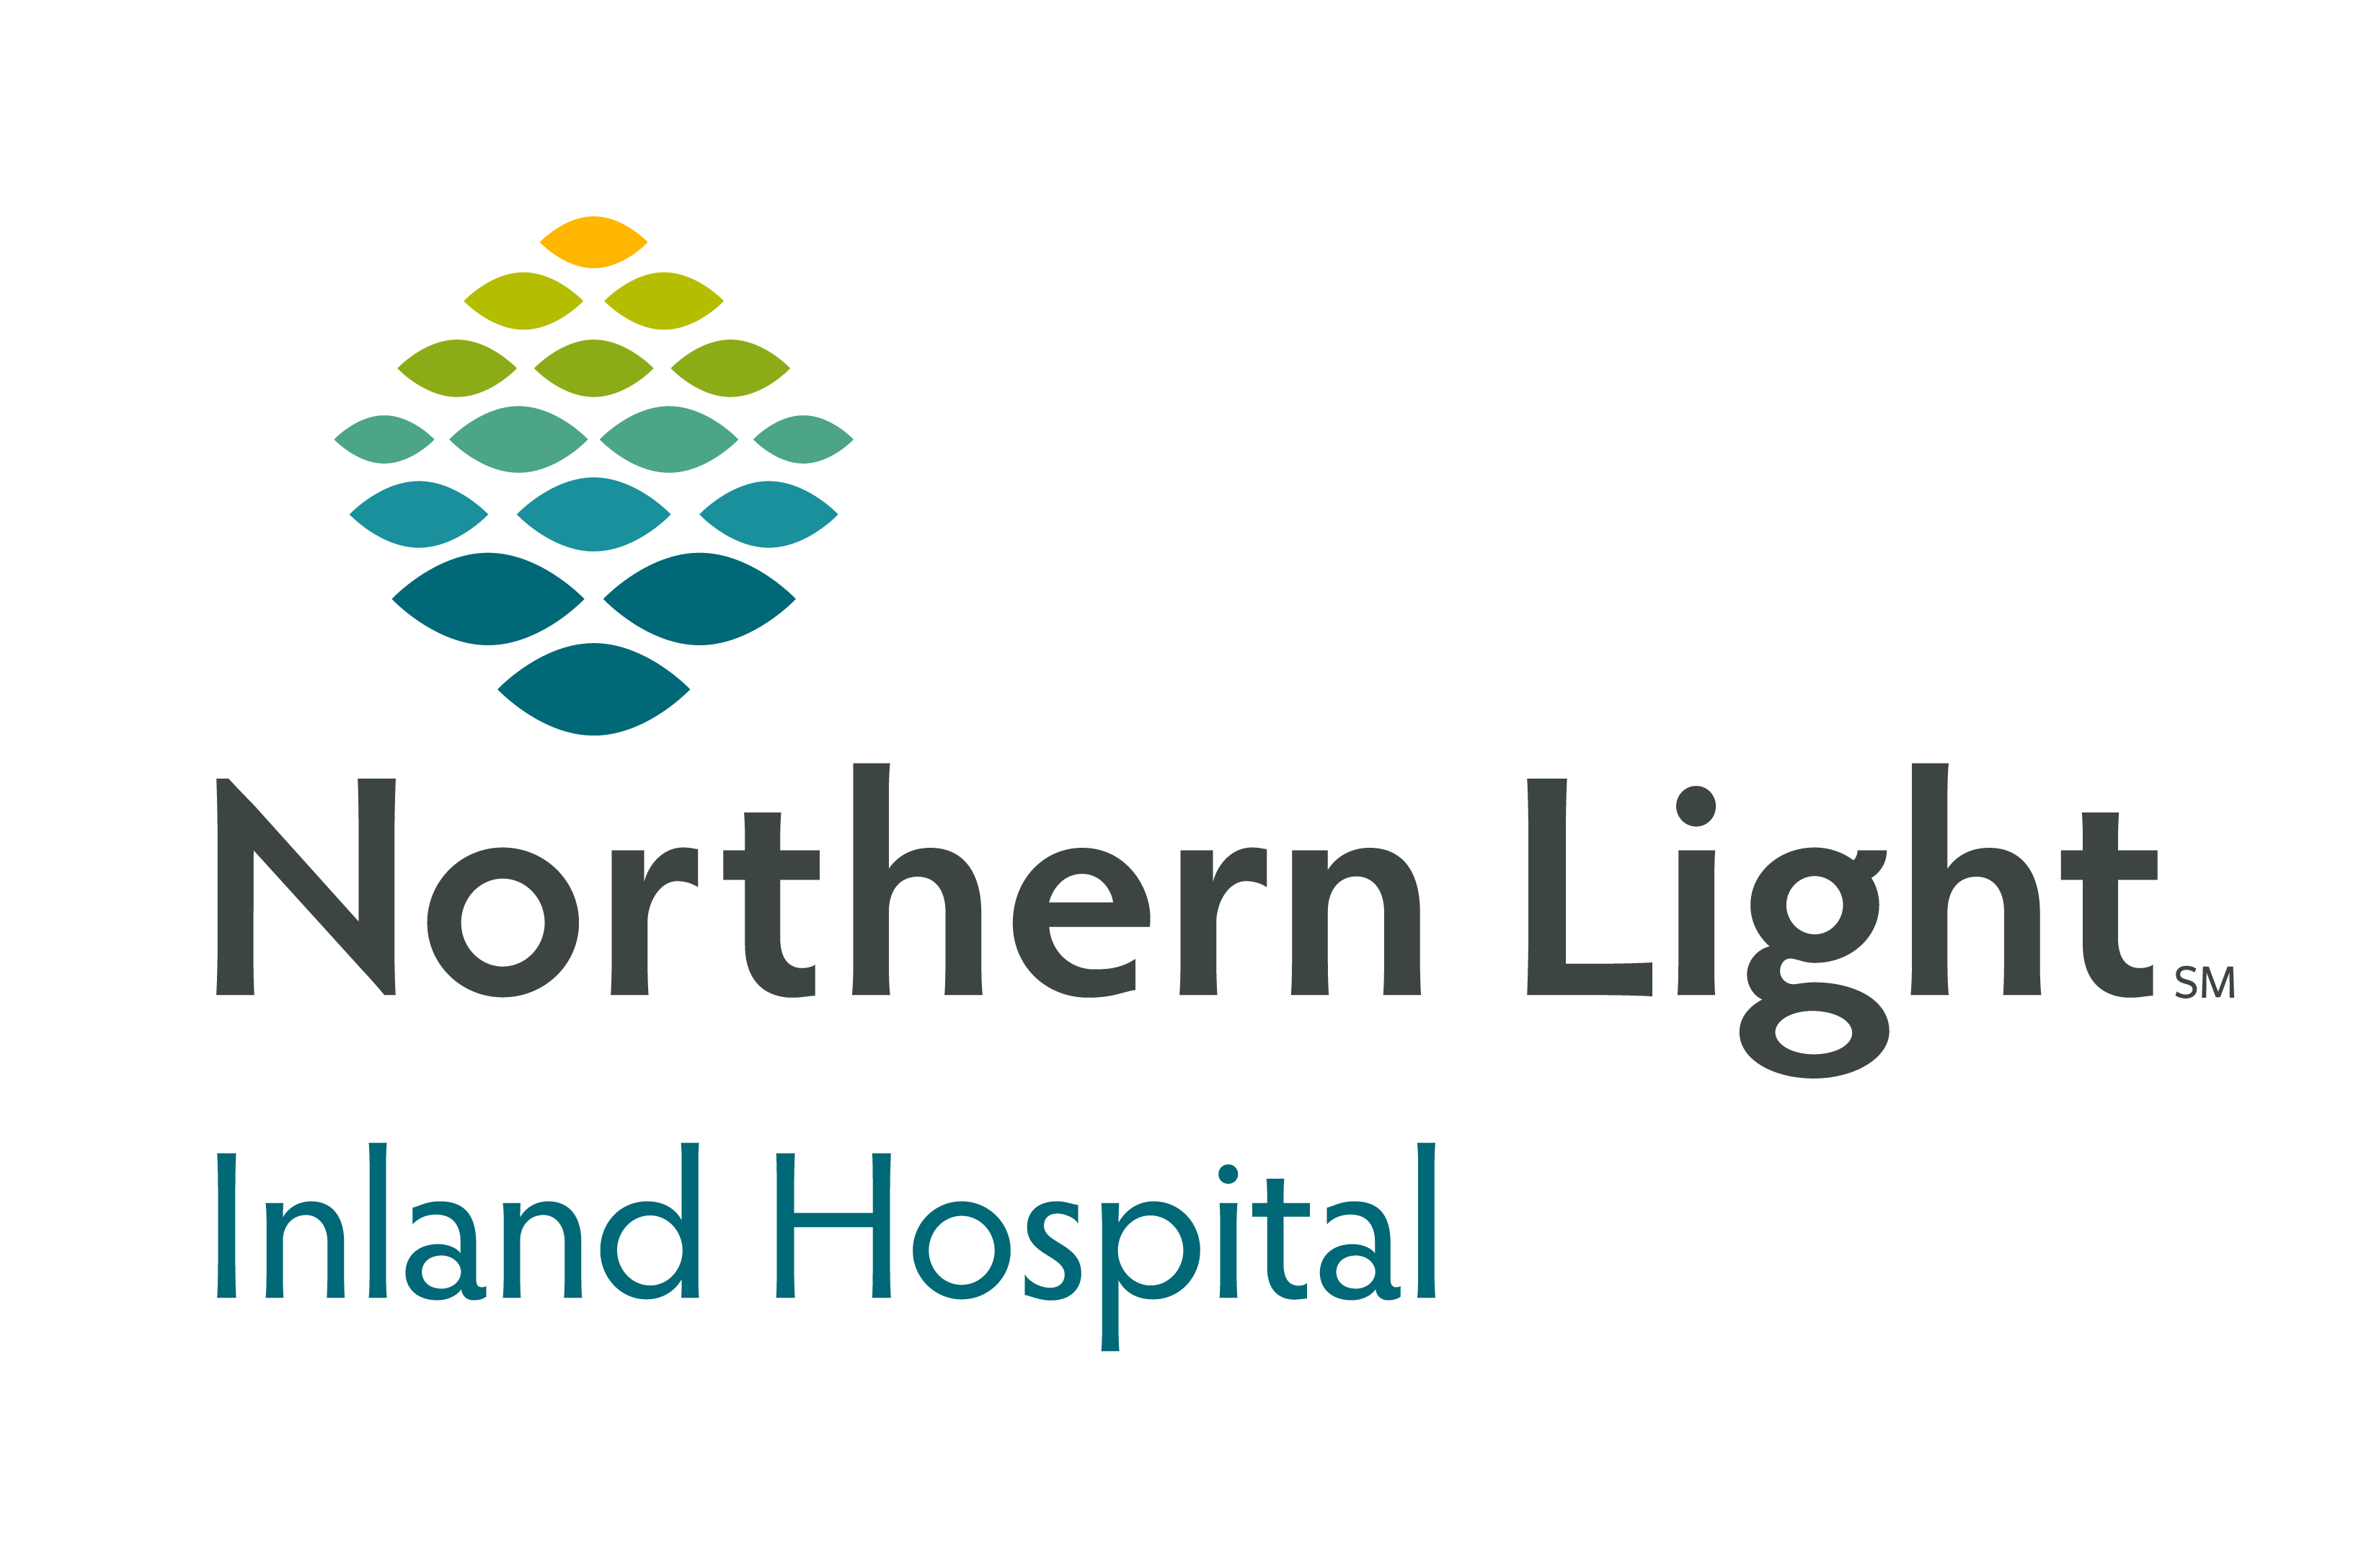 Northern Light Inland Hospital